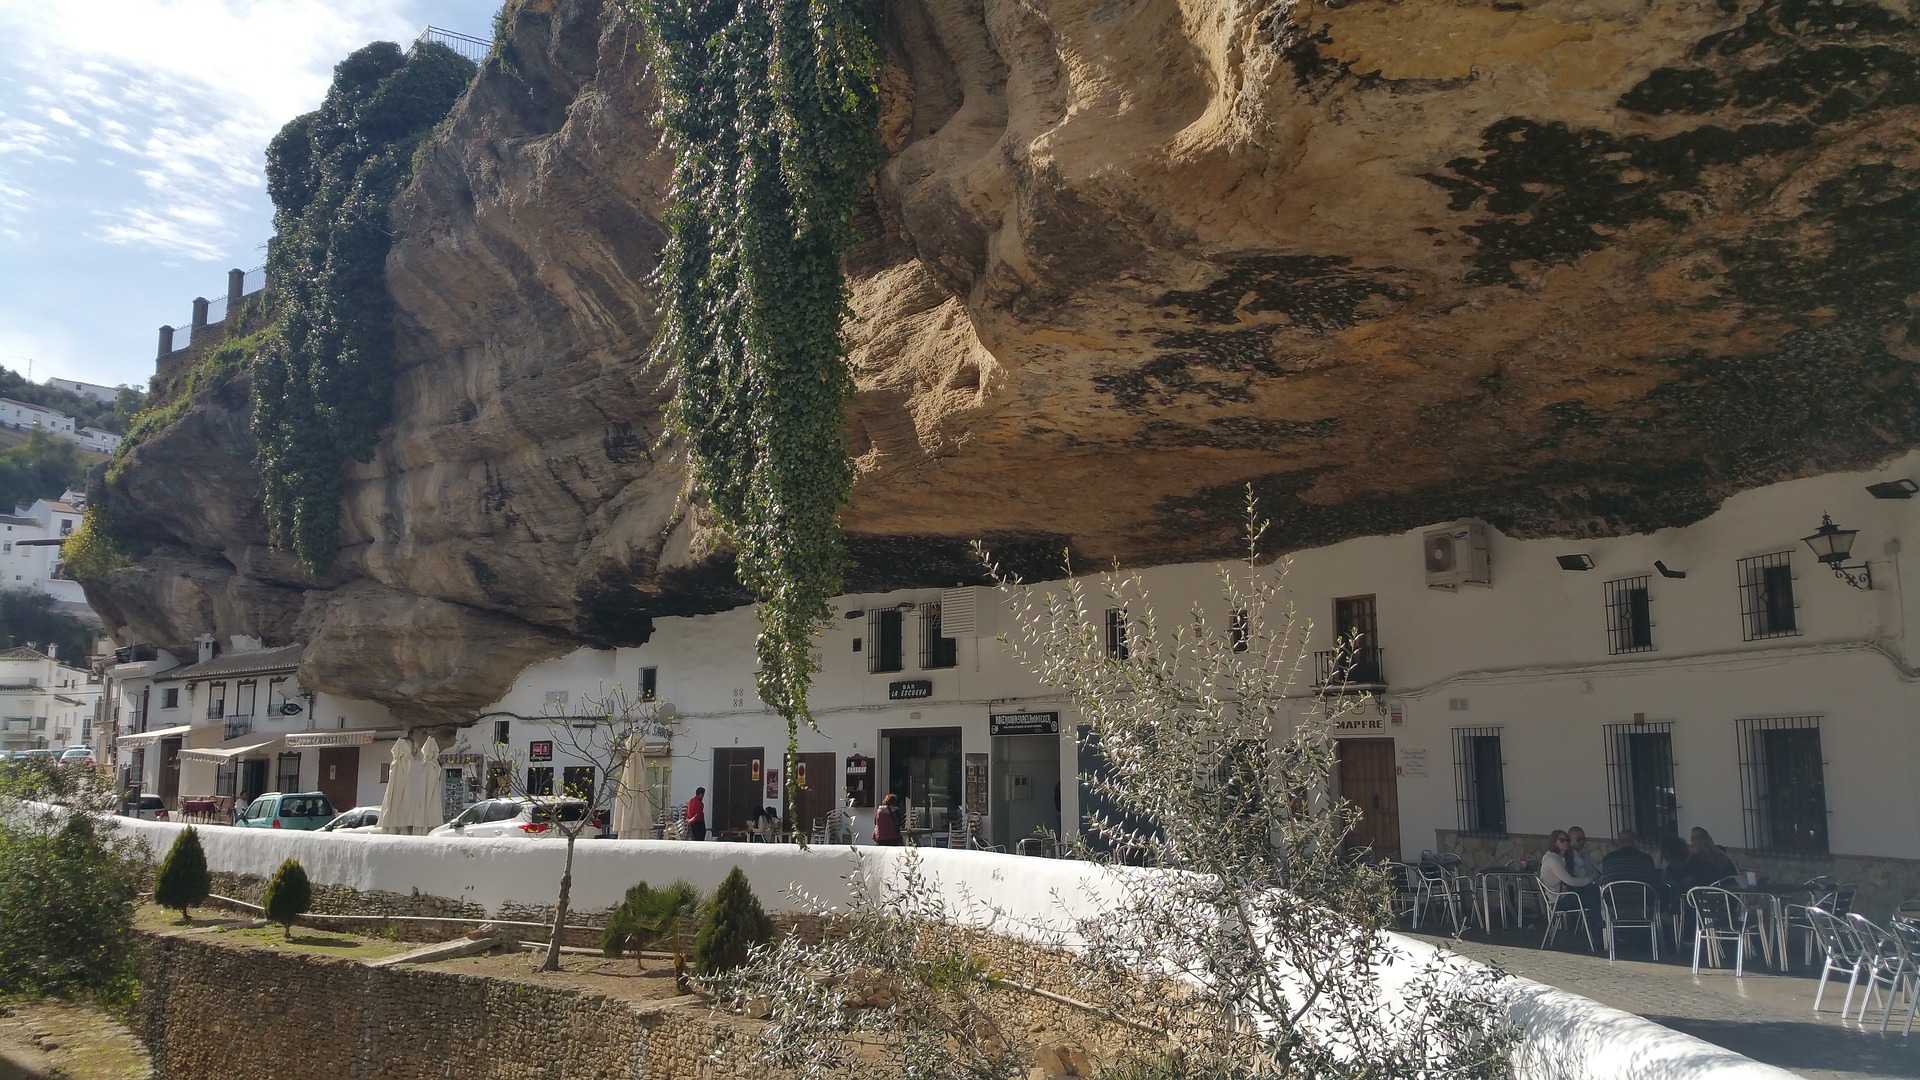 You are currently viewing Setenil de las Bodegas, a cidade construída sob a rocha em Espanha